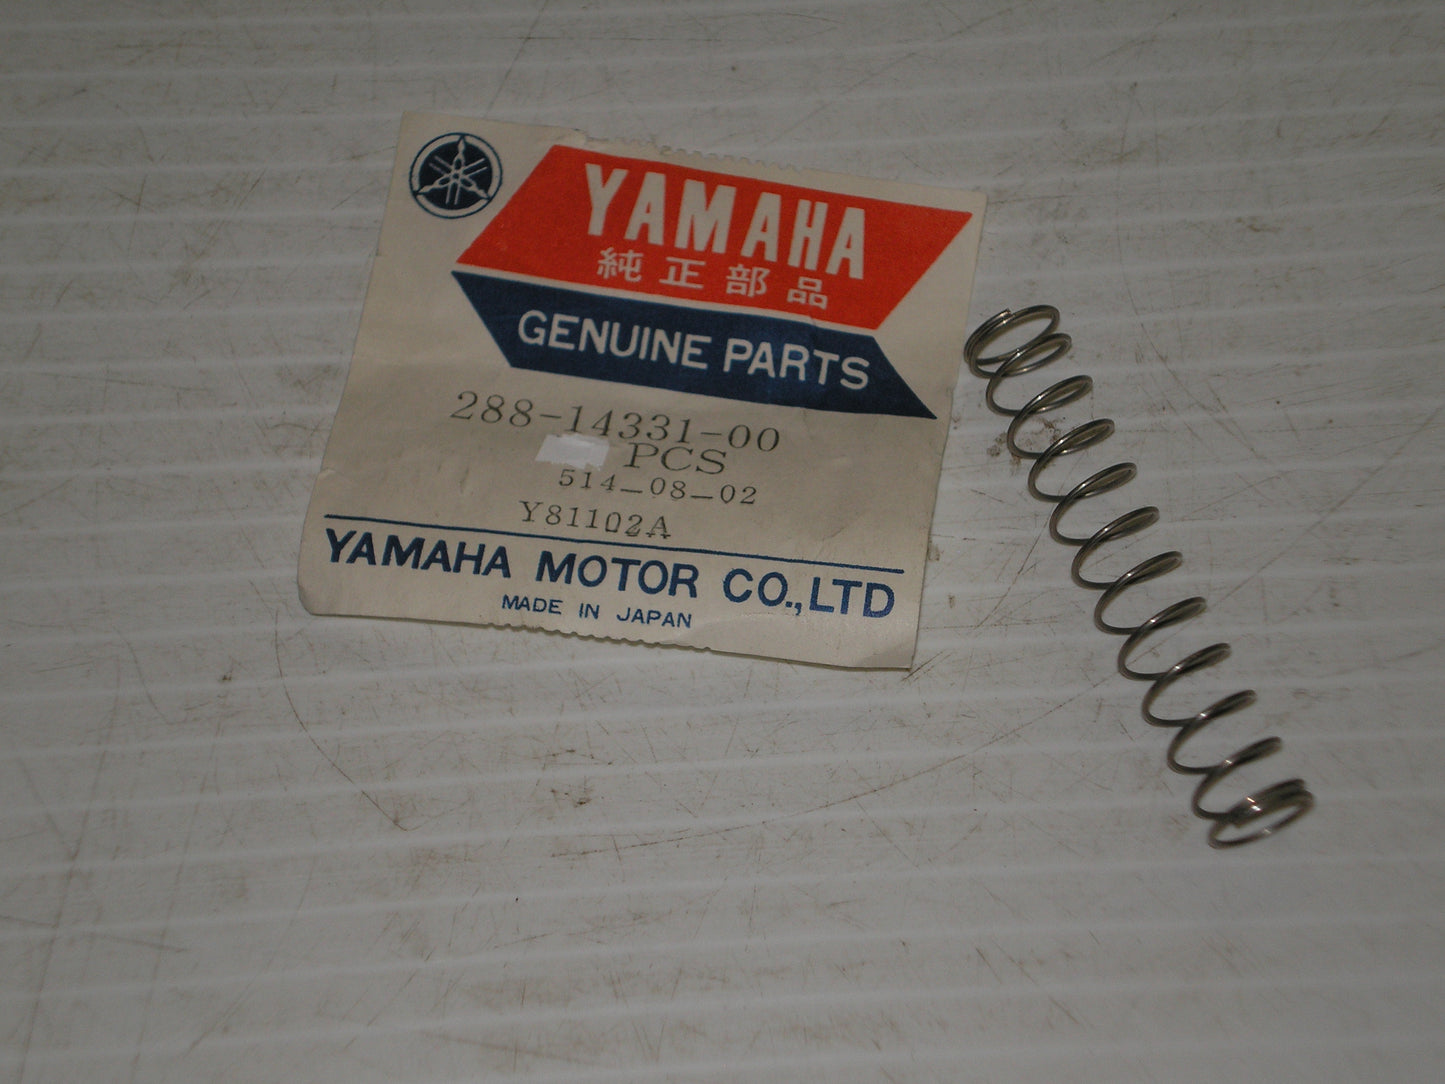 YAMAHA JT1 JT2 1971-1972 Throttle Valve Spring 288-14331-00